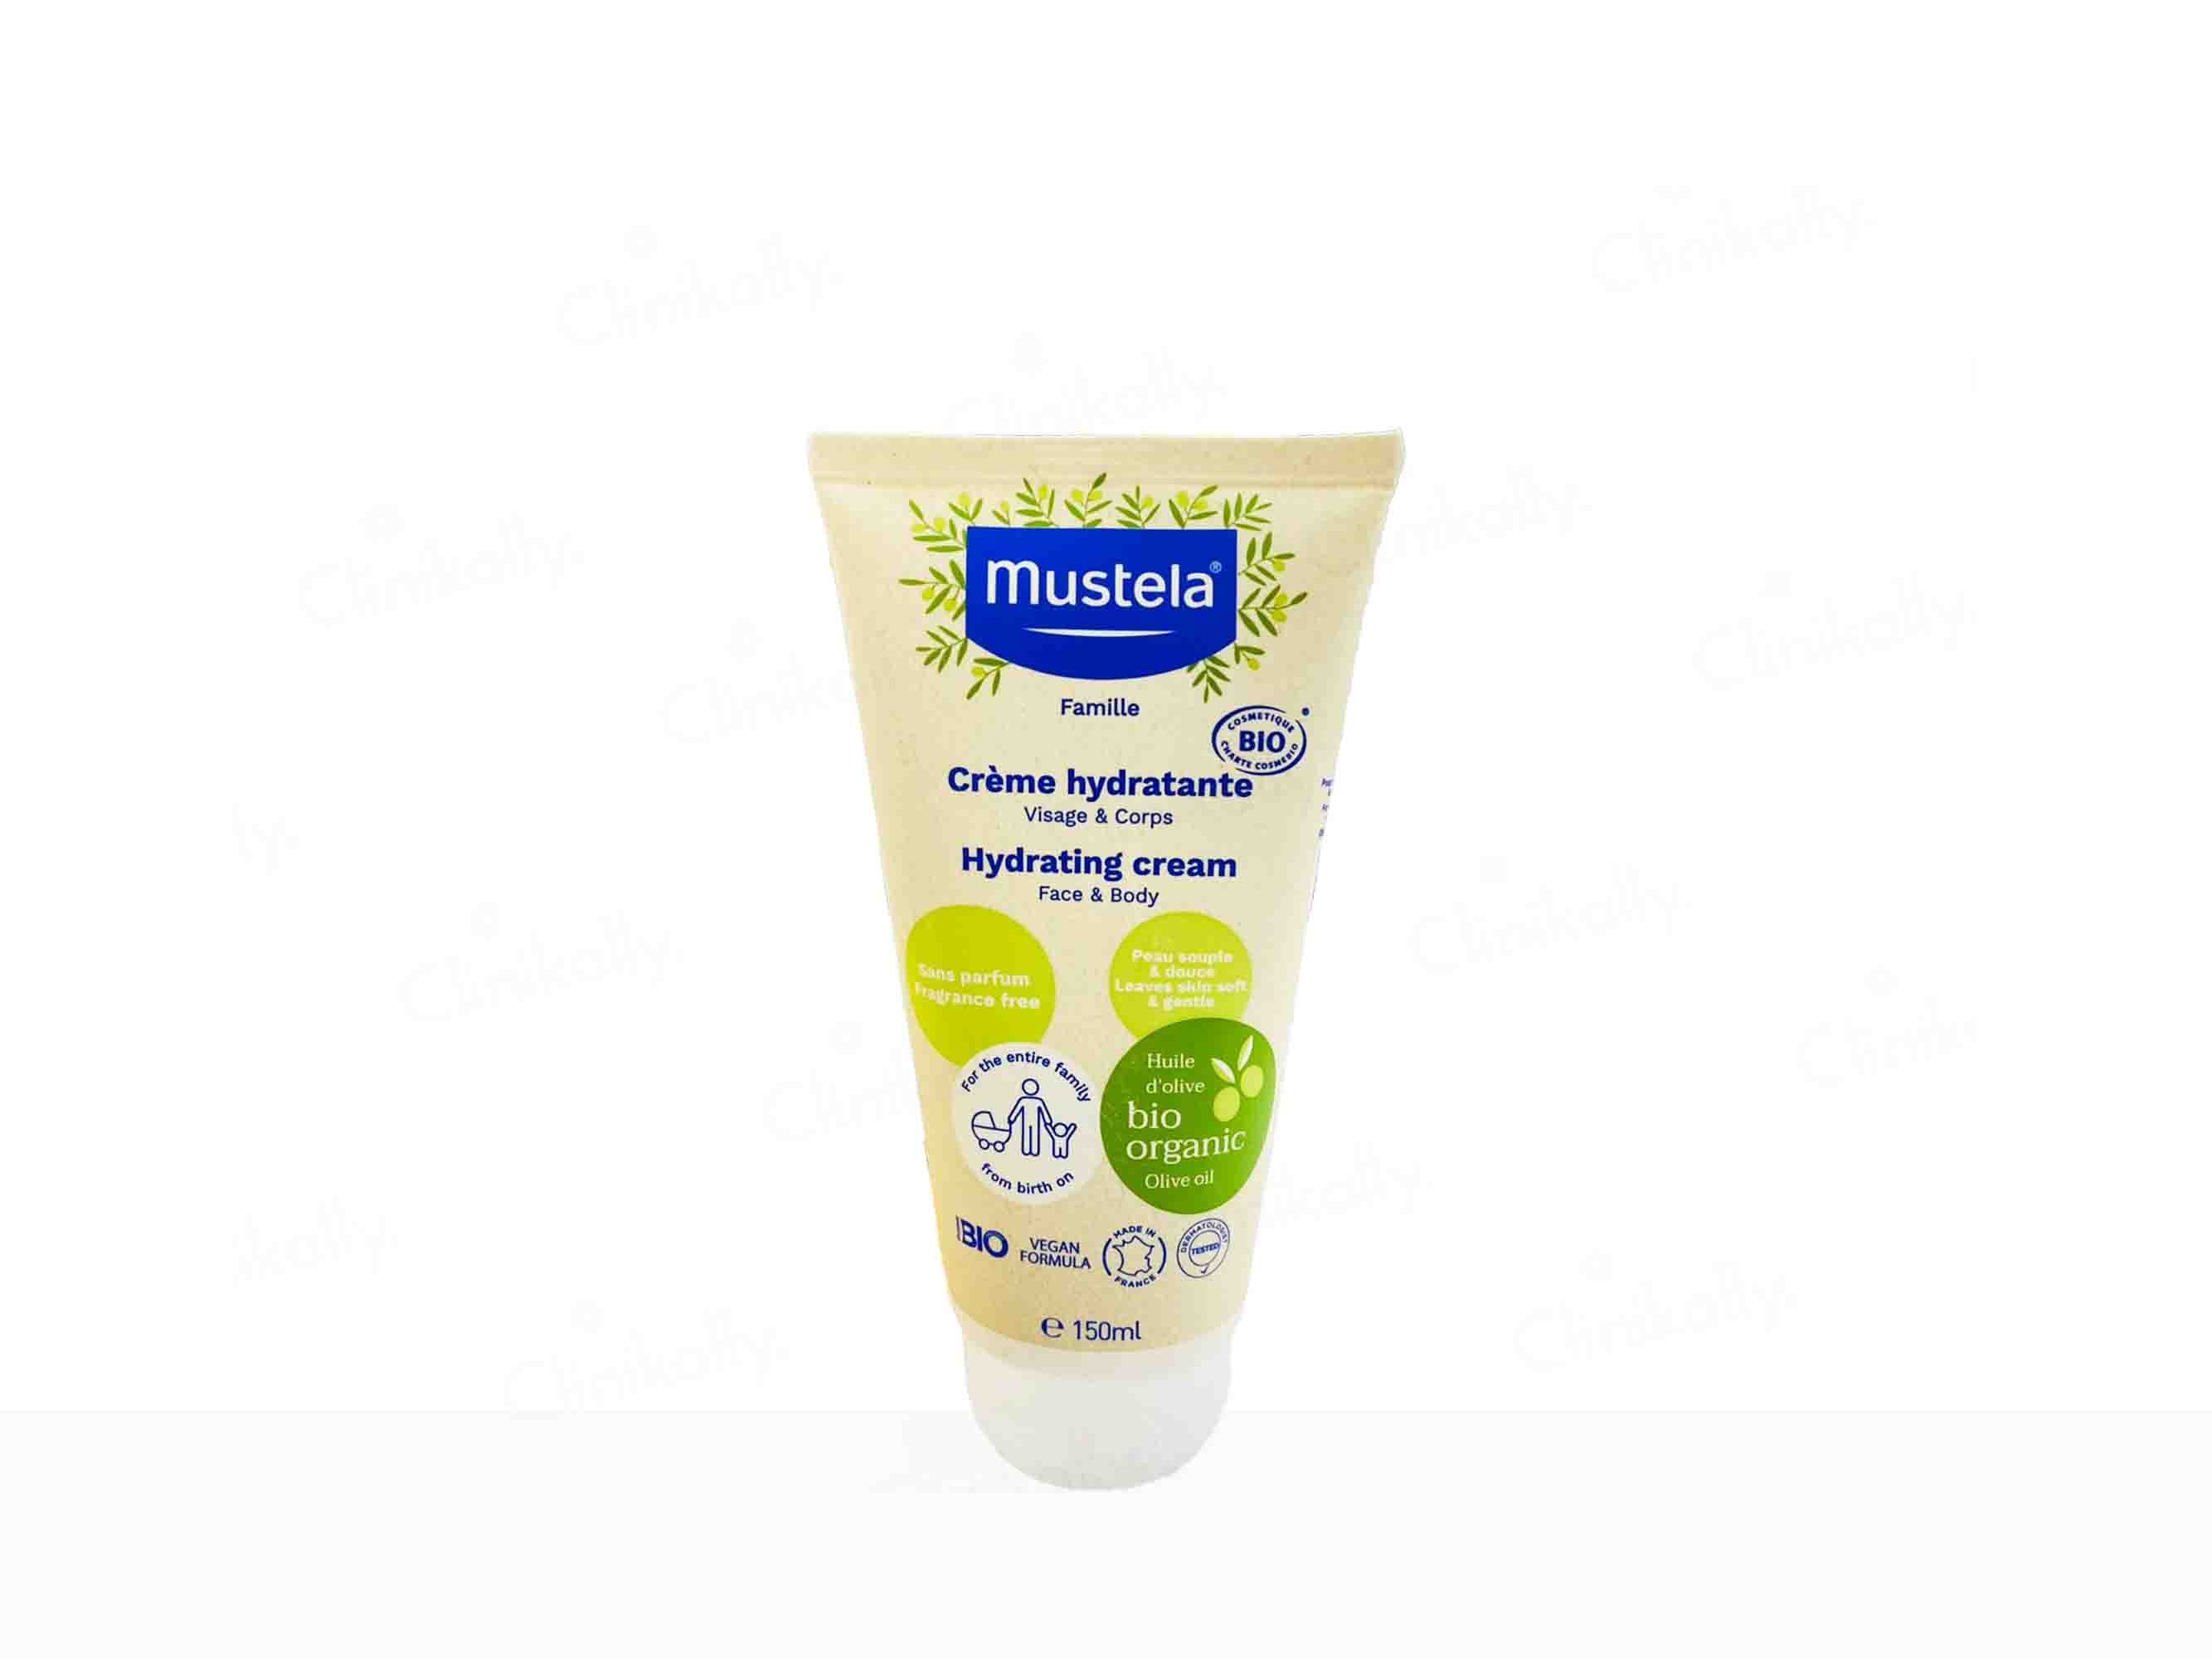 Mustela Face & Body Hydrating Cream